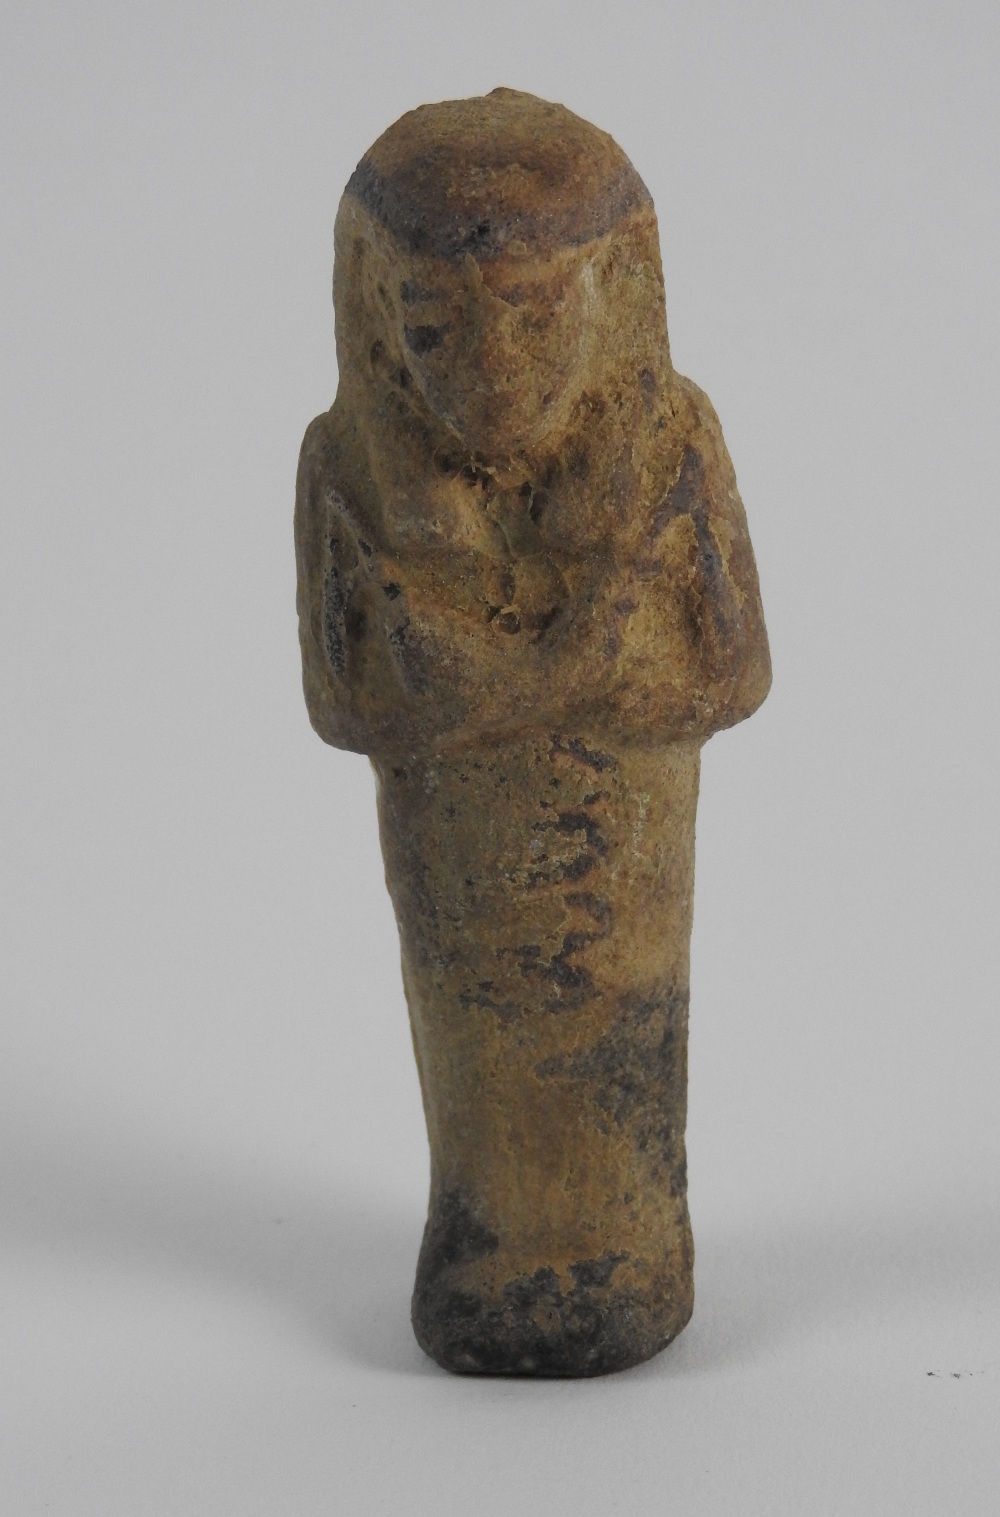 A late period Egyptian shabti figure 9cm high